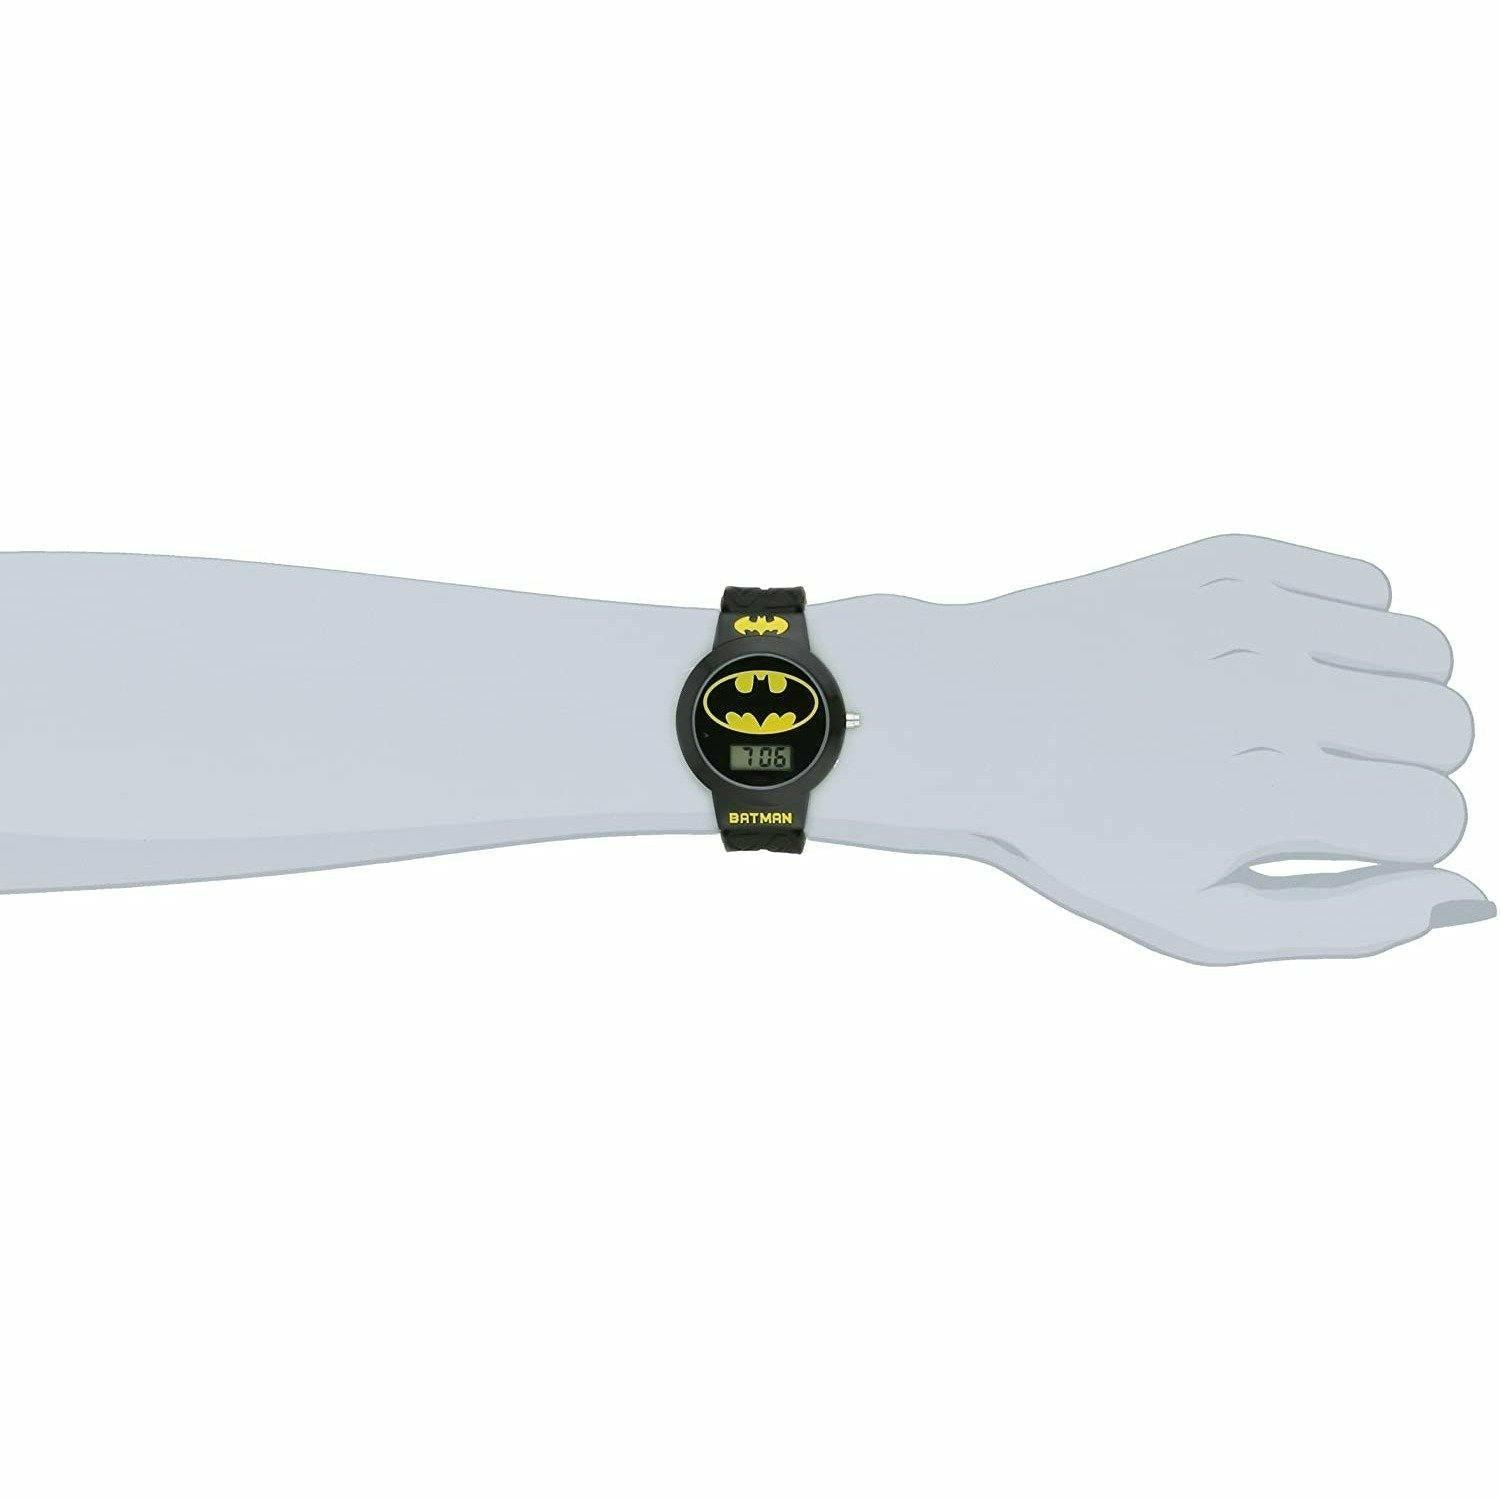 Batman Kids' BAT5041 Batman Watch with Black Rubber Band - BumbleToys - 5-7 Years, Batman, Boys, DC Comics, Pre-Order, Wrist Watches